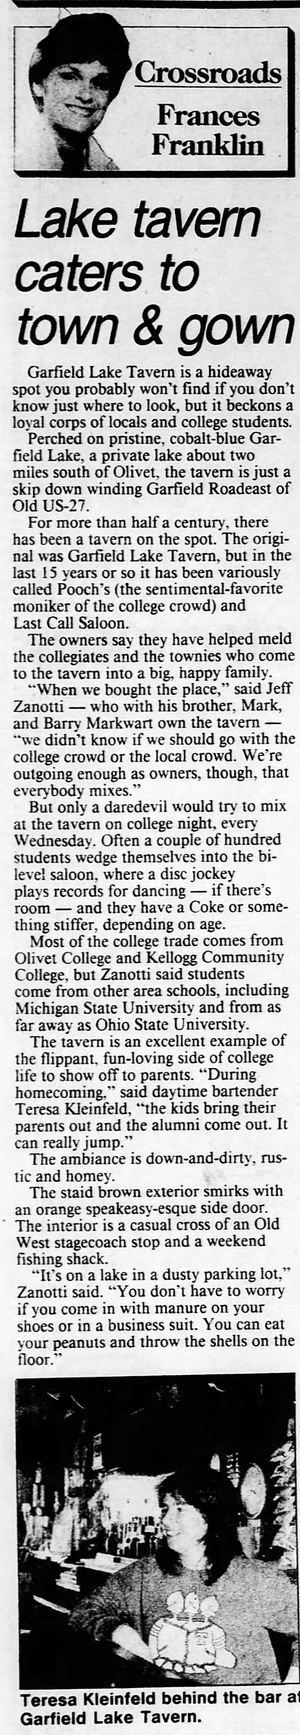 Garfield Lake Tavern - Apr 20 1986 Review Article